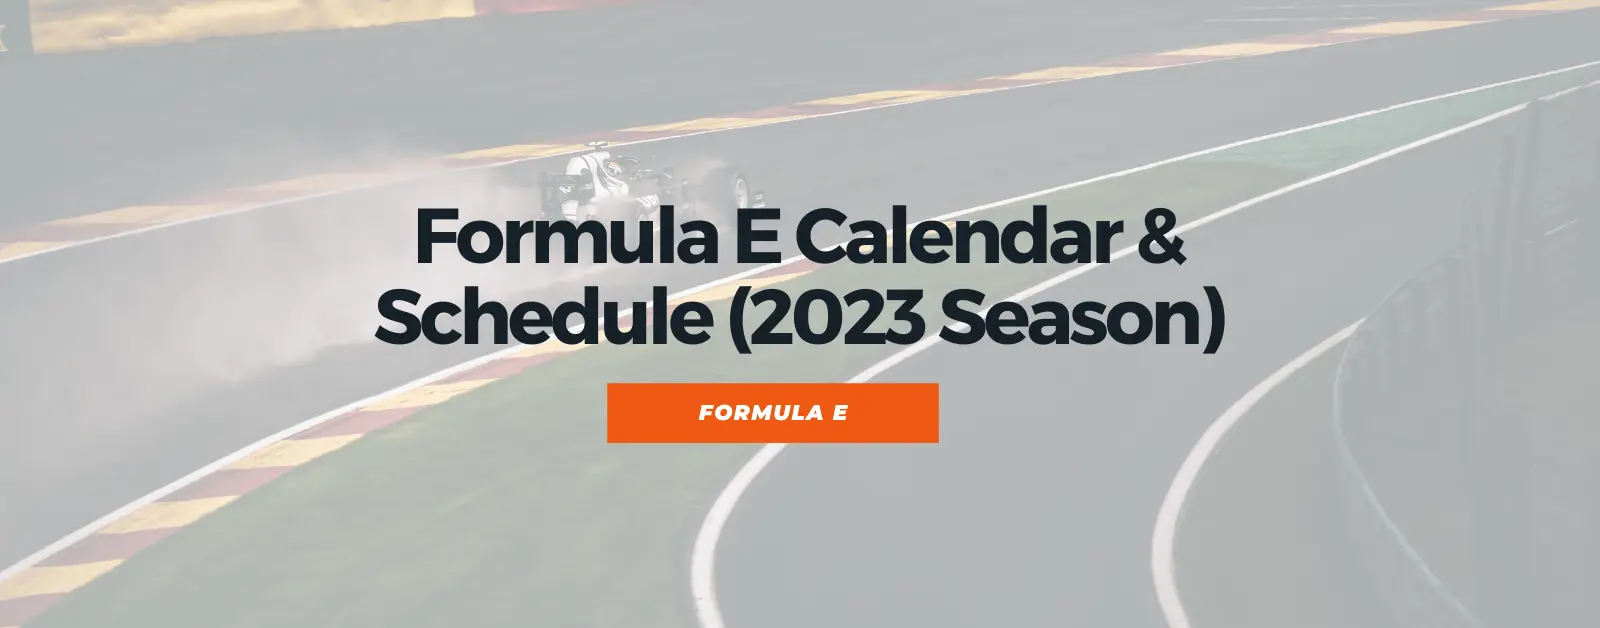 Formula E Calendar & Schedule (2023 Season)